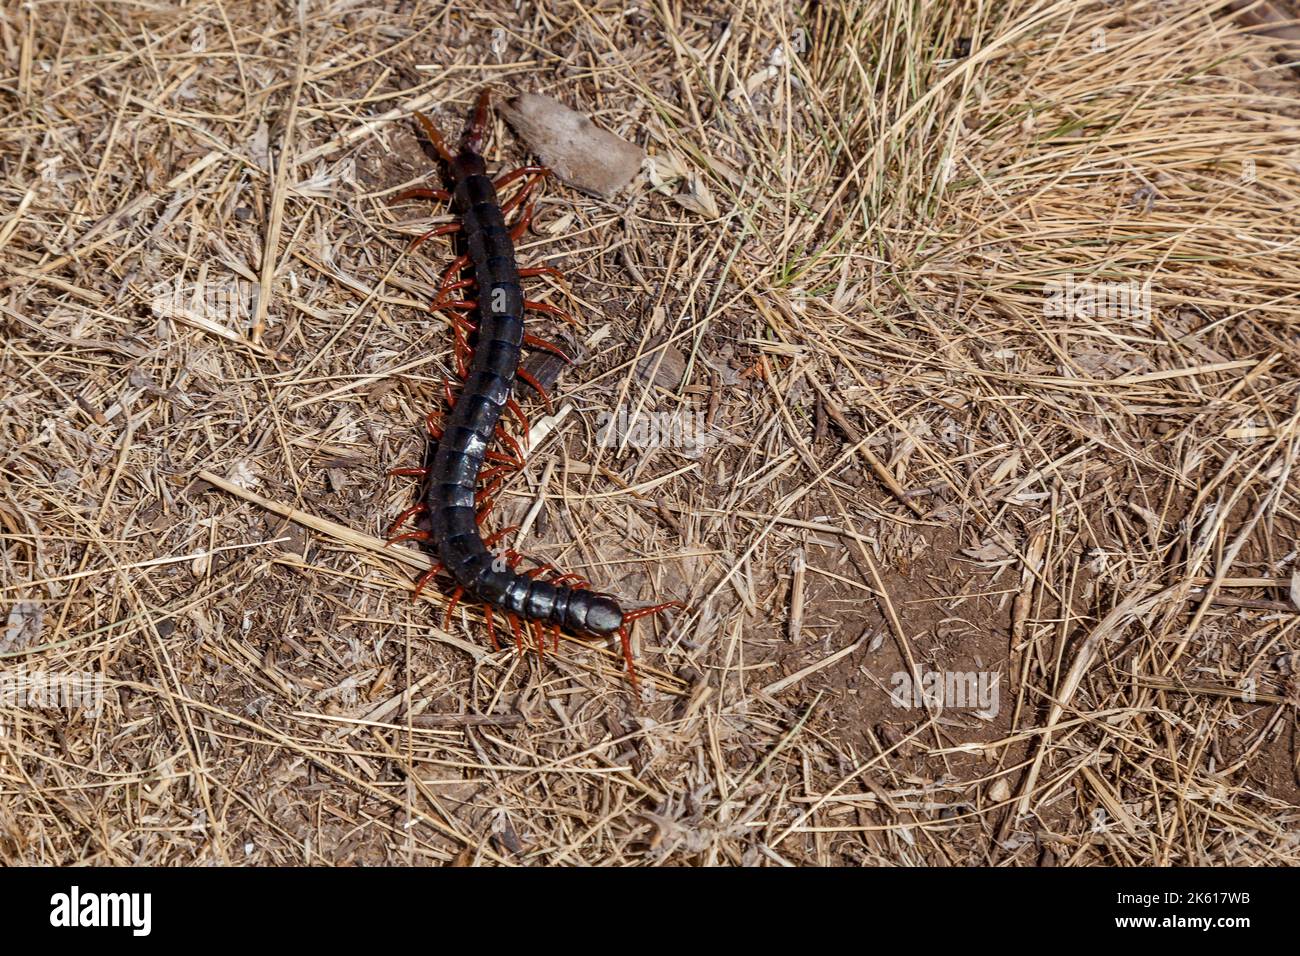 Artropodi invertebrati di Centipede. Centipede nero con zampe rosse in erba secca Foto Stock